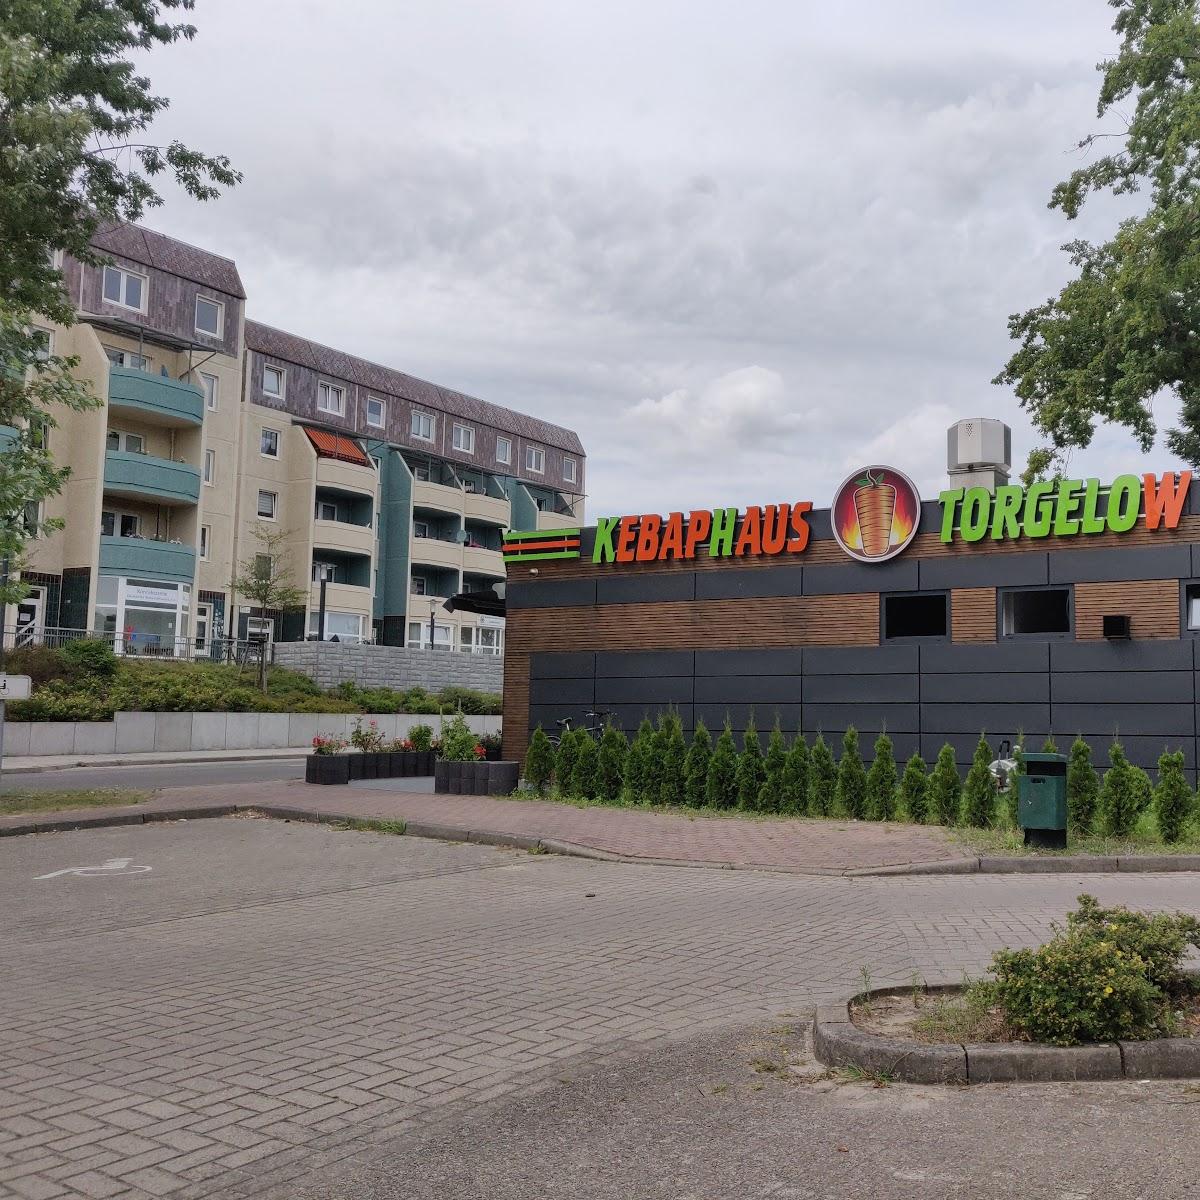 Restaurant "Kebap Haus" in Torgelow